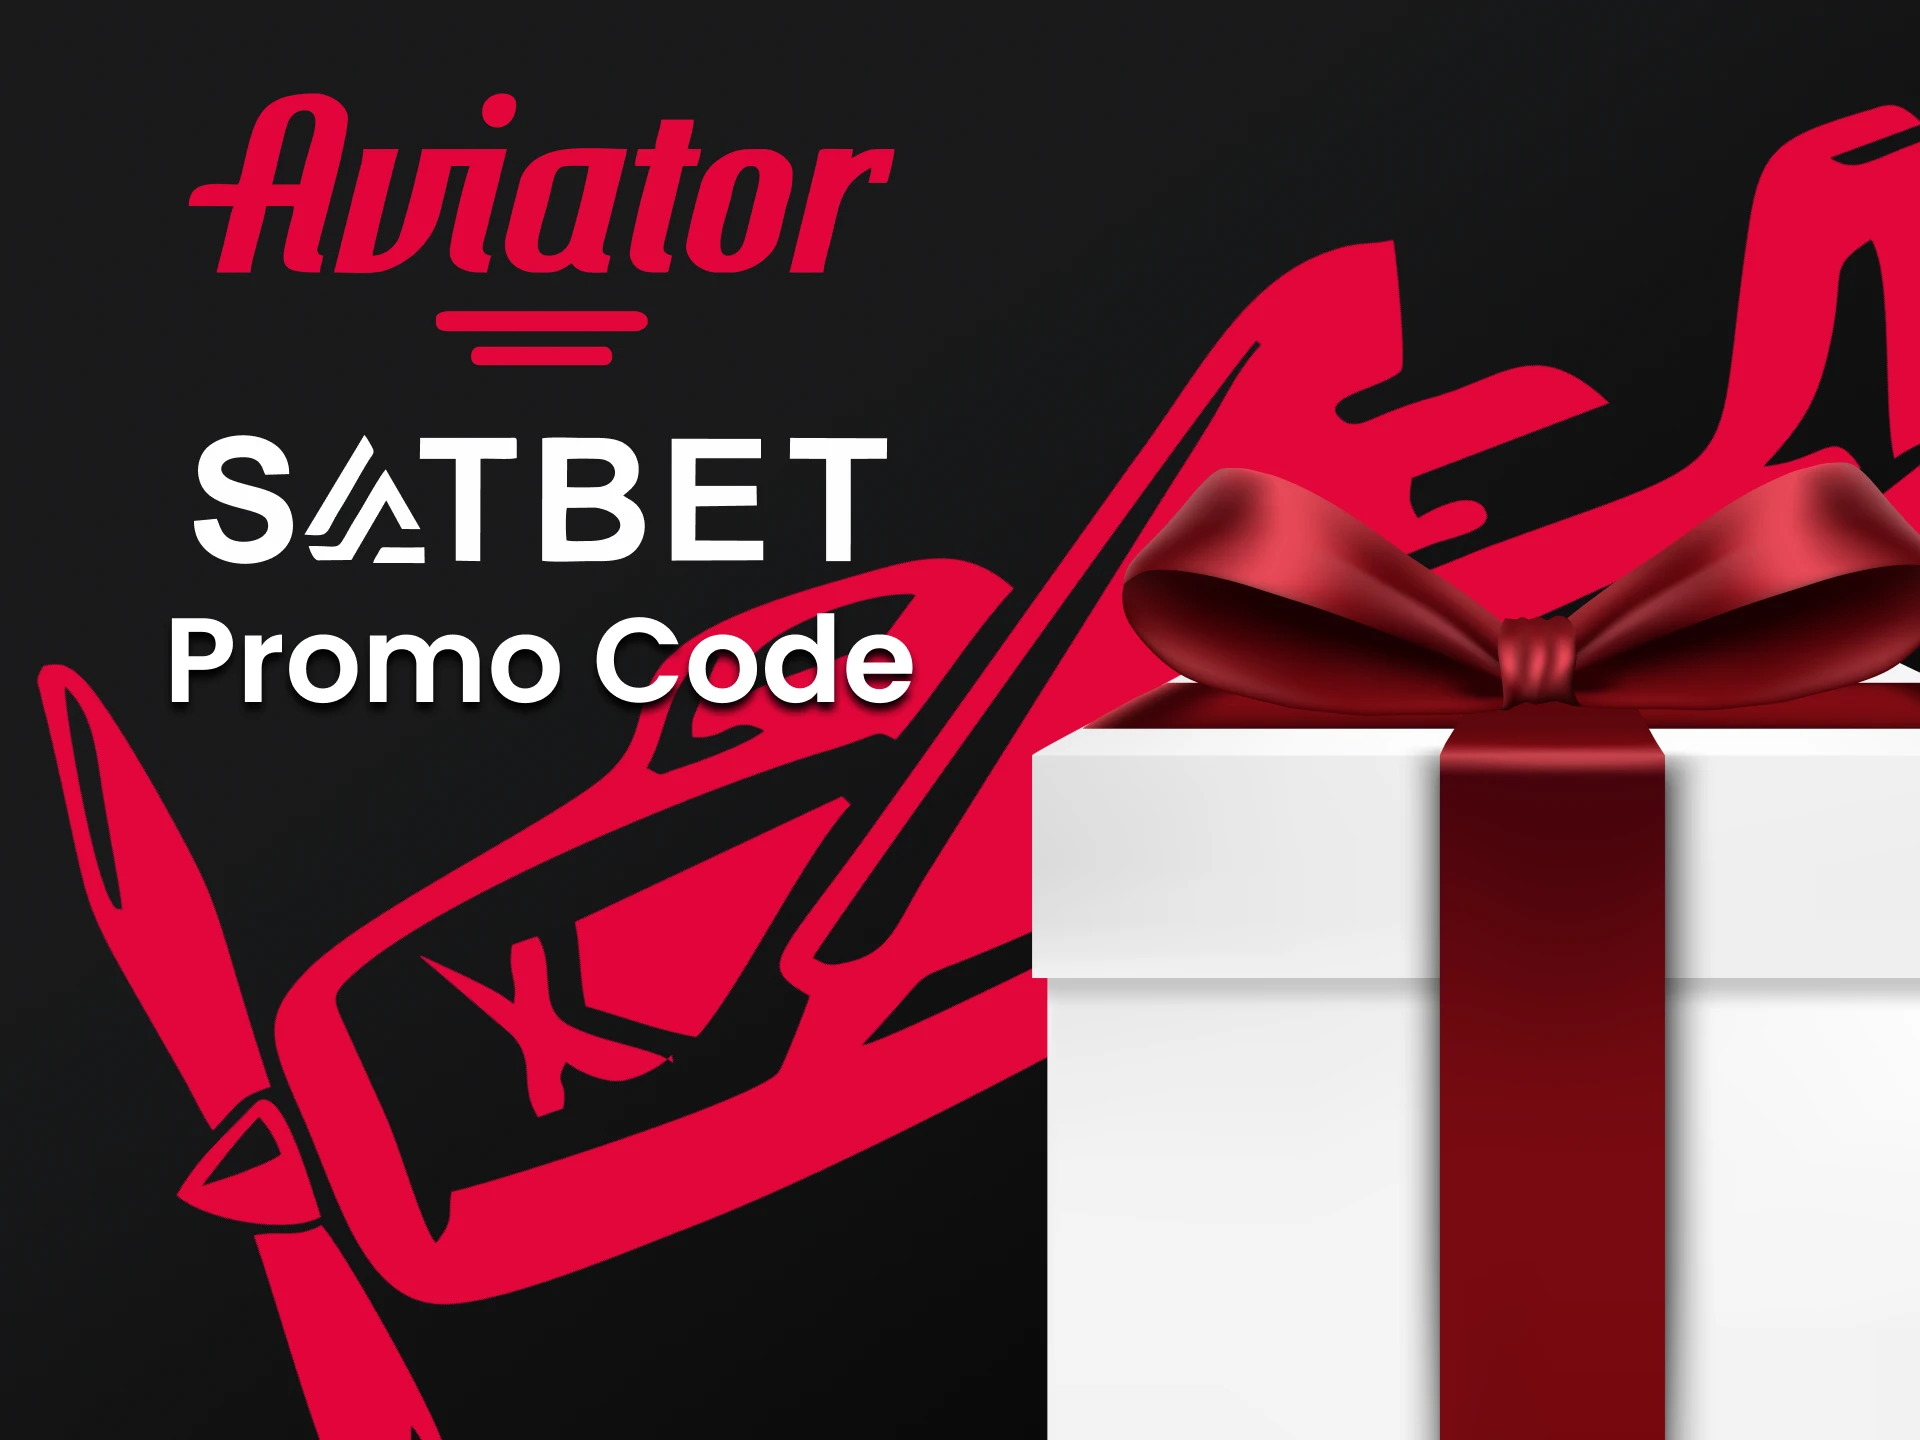 Get bonus promo code for Aviator from Satbet.